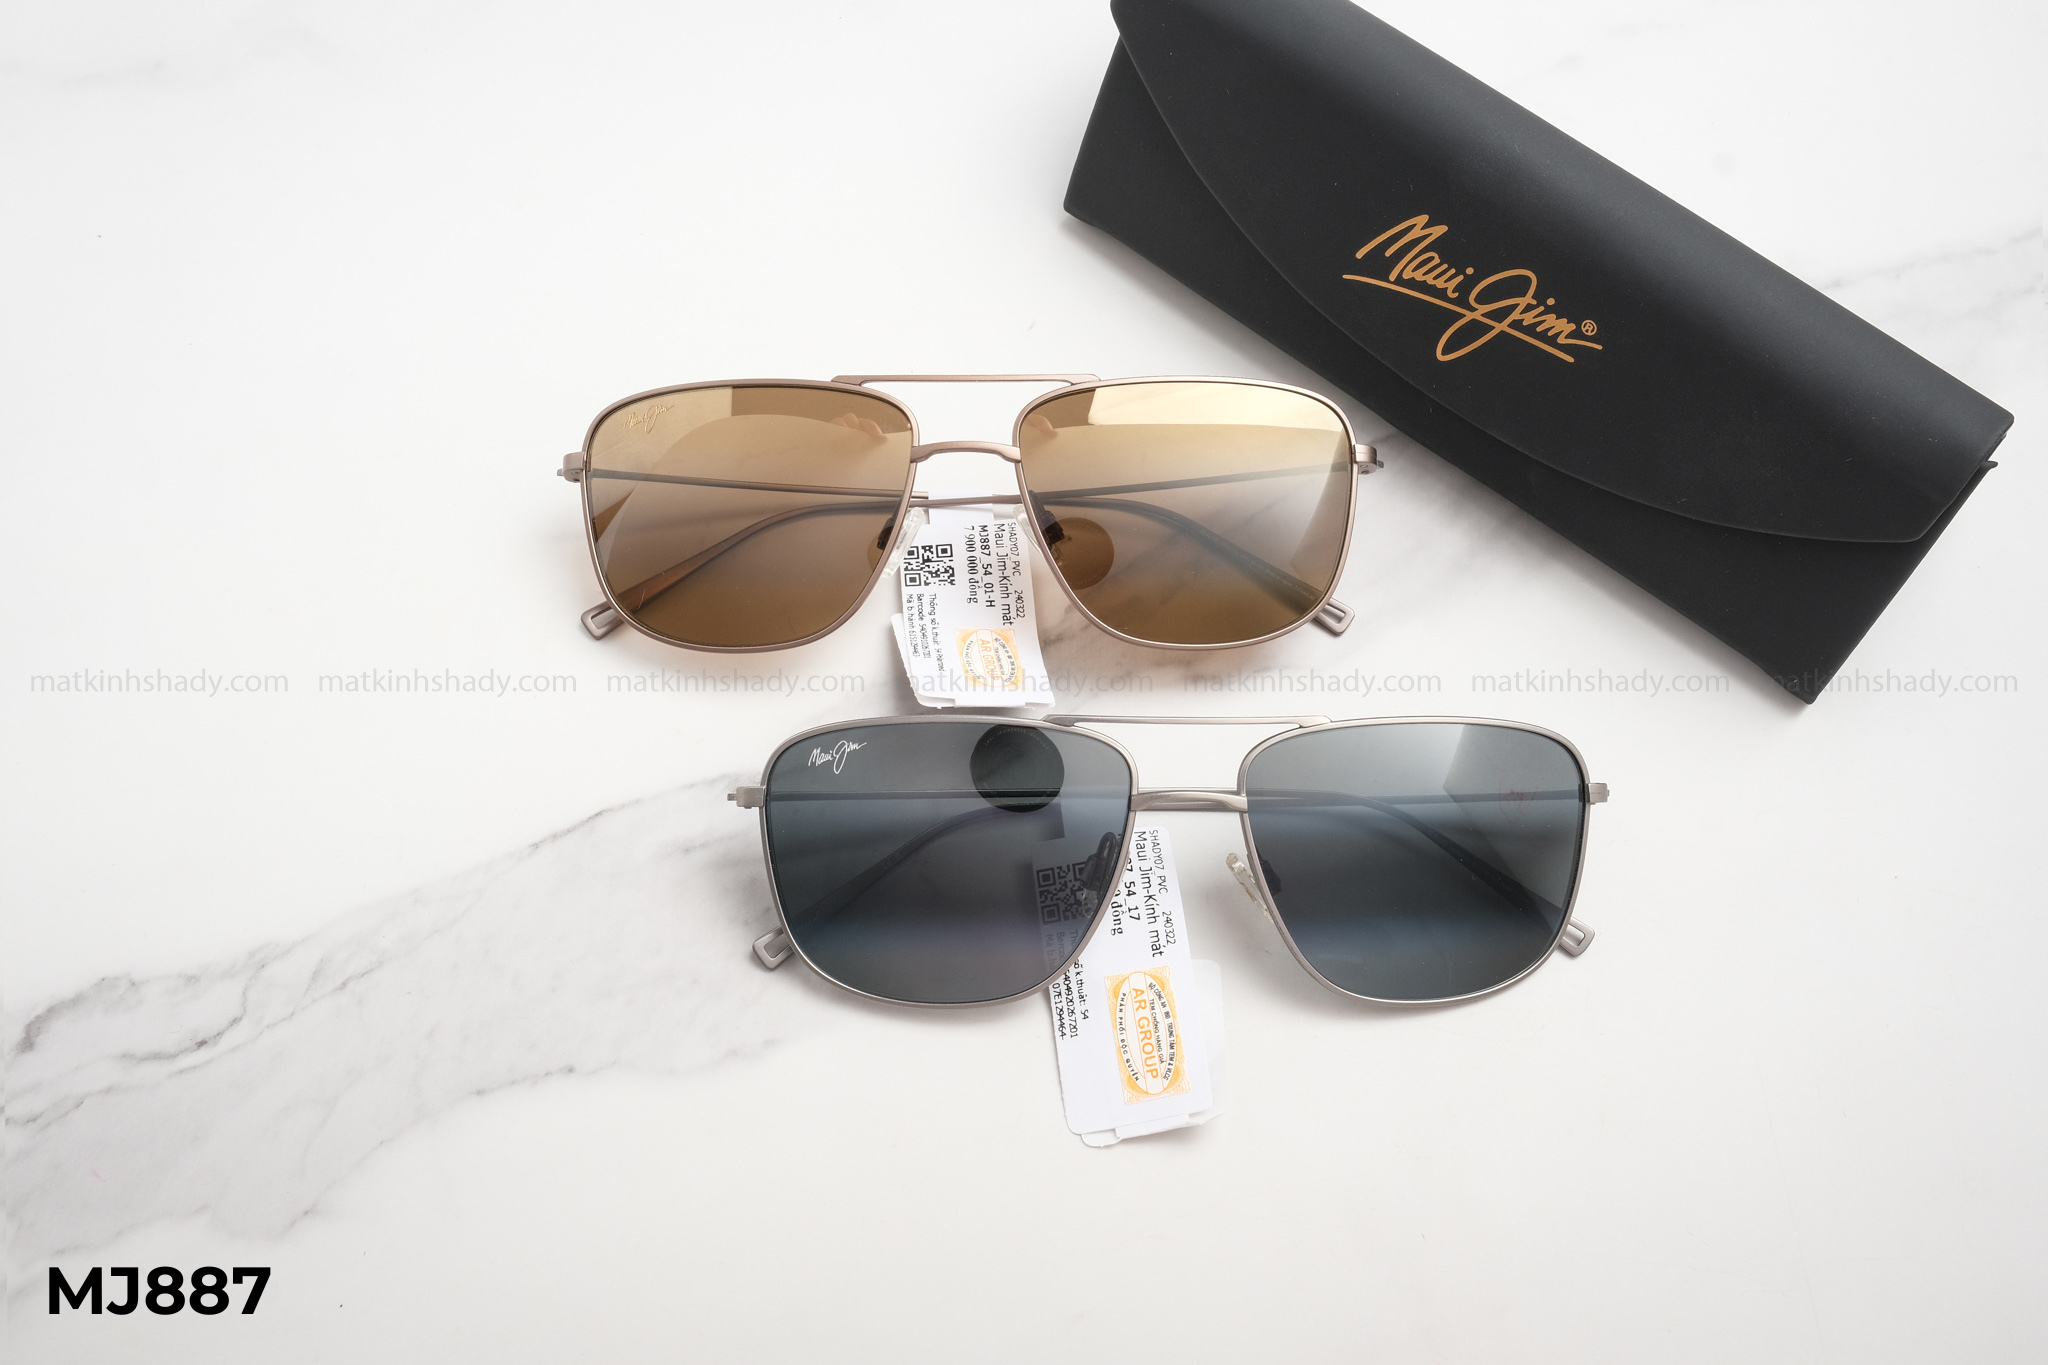  Maui Jim Eyewear - Sunglasses - MJ887 